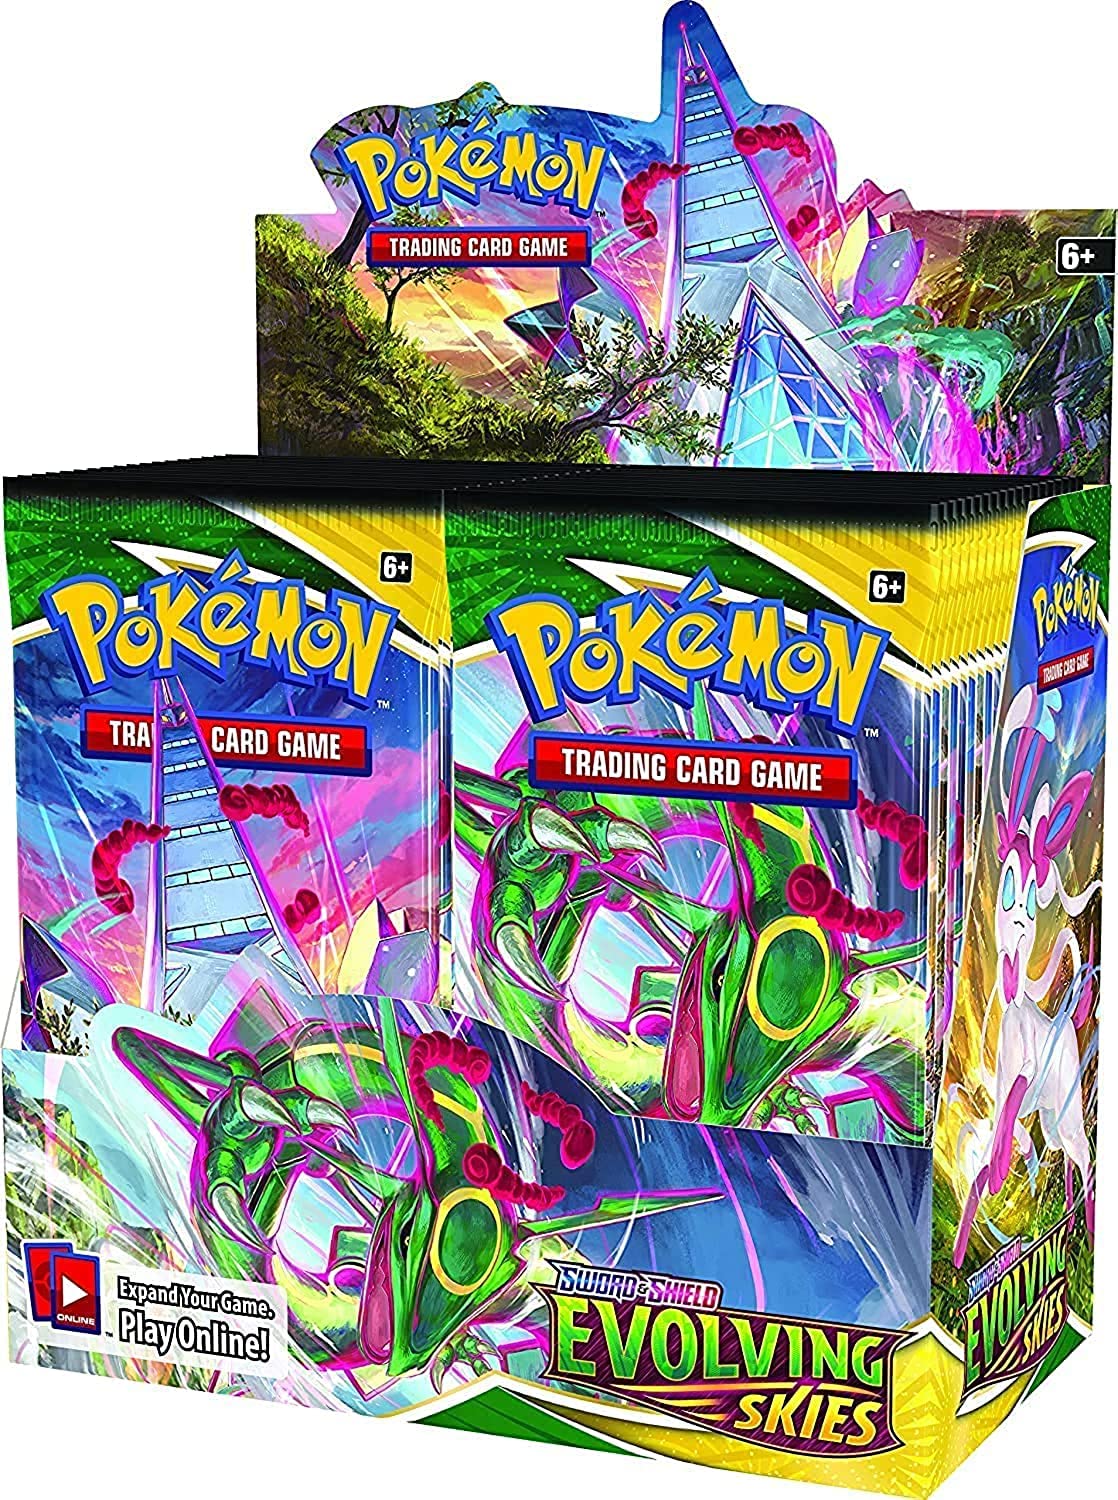 Pokémon TCG: Sword & Shield Evolving Skies Booster Box, Size: 4. Booster Display